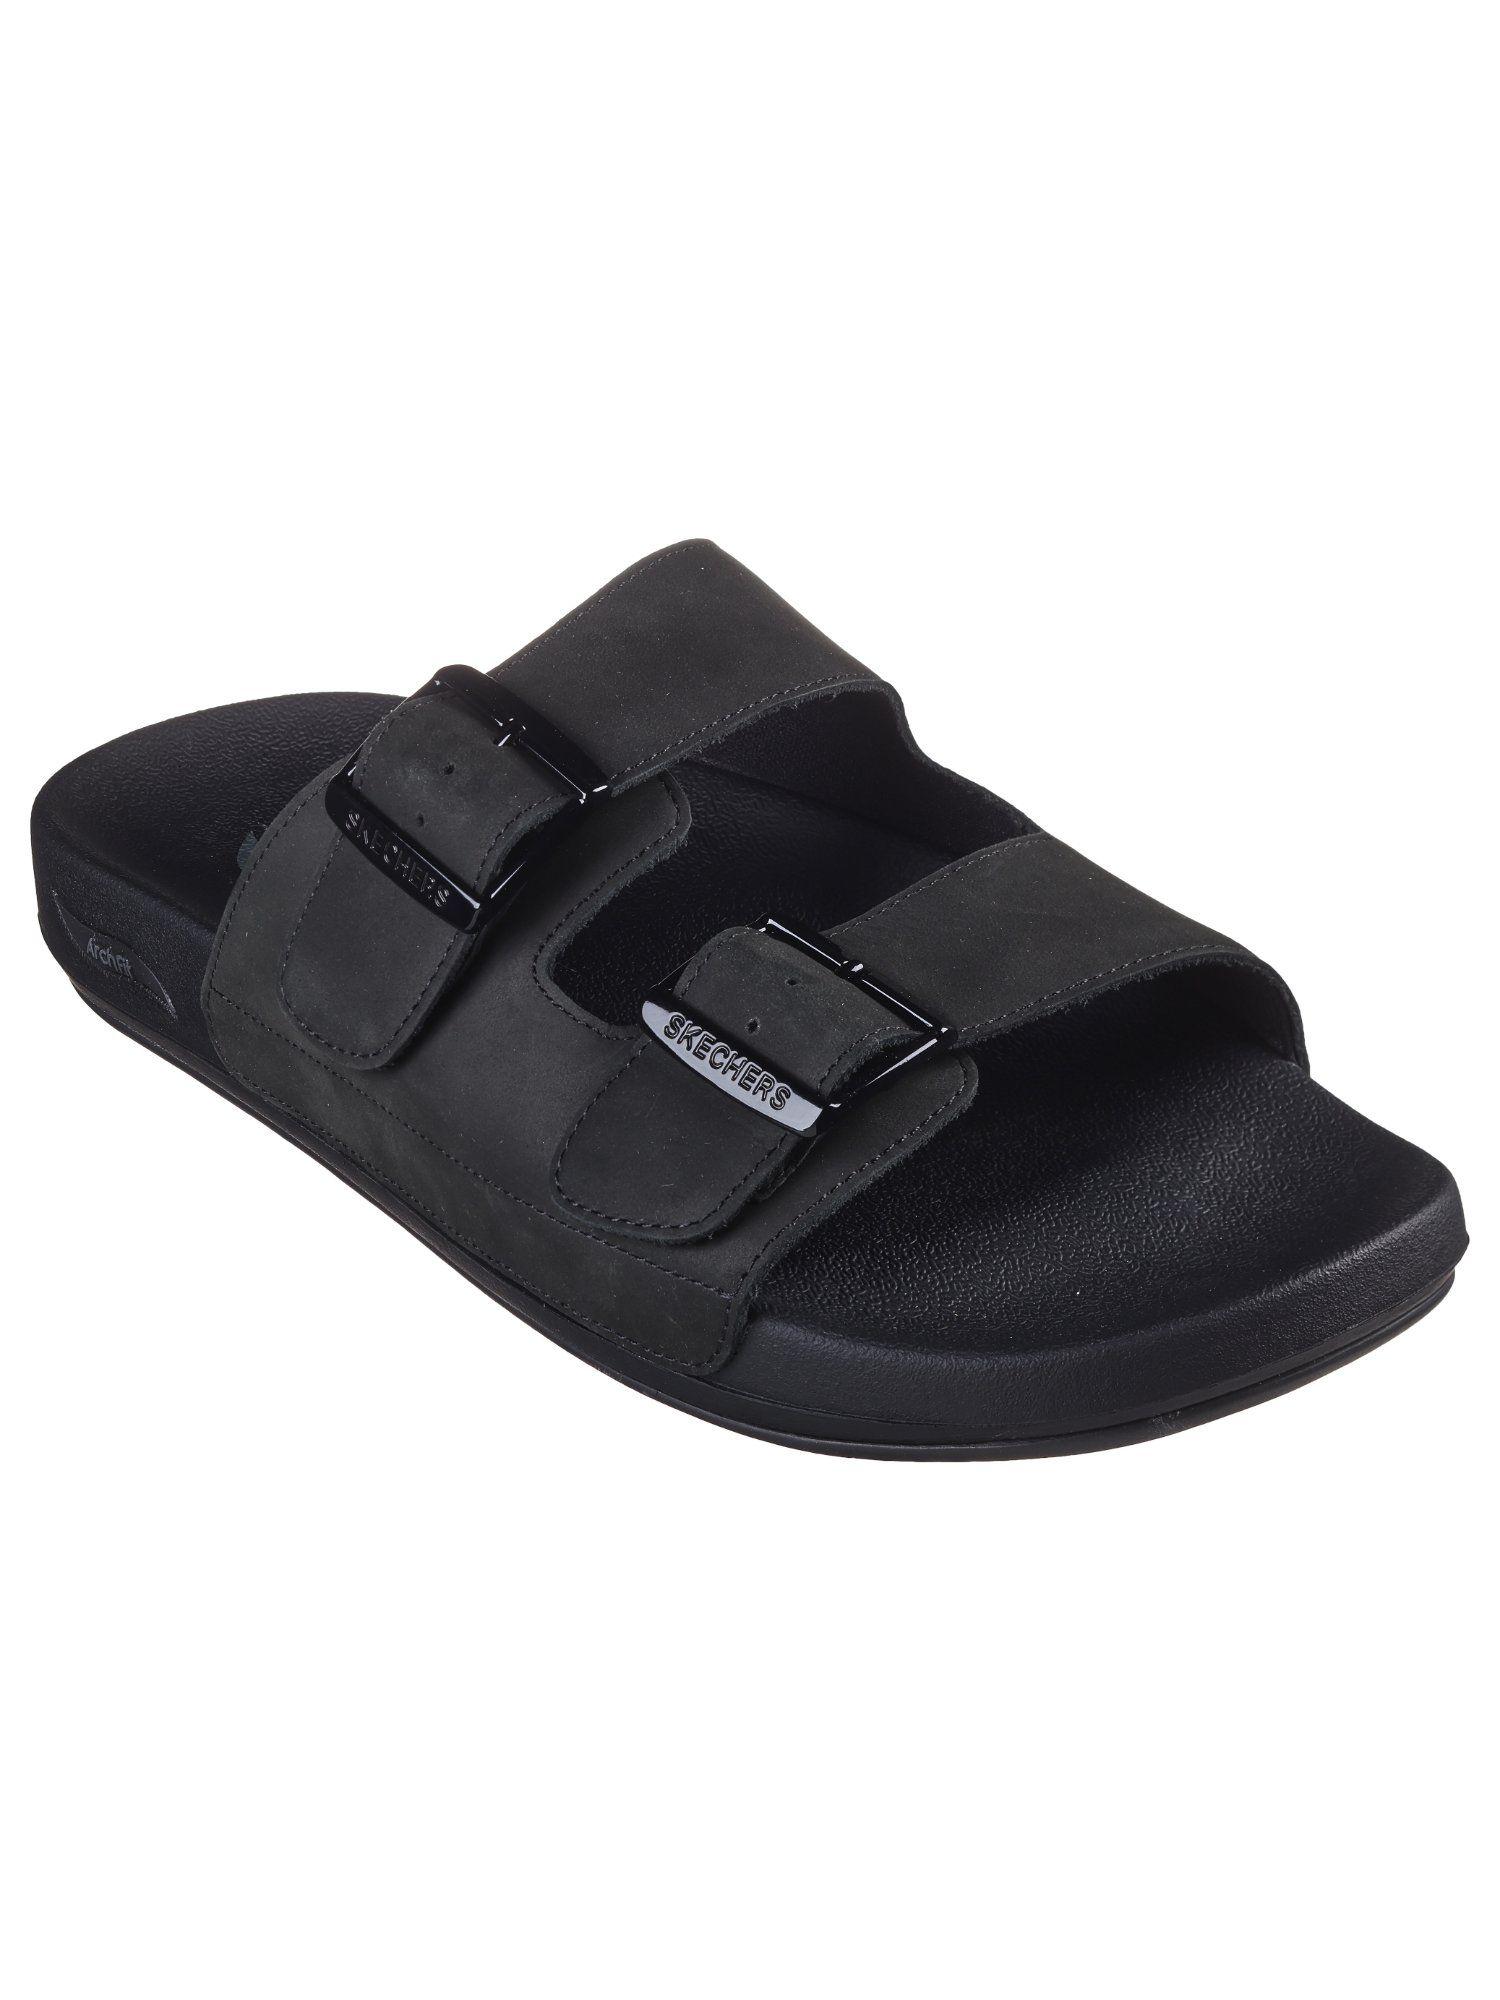 arch fit pro sandal black sliders